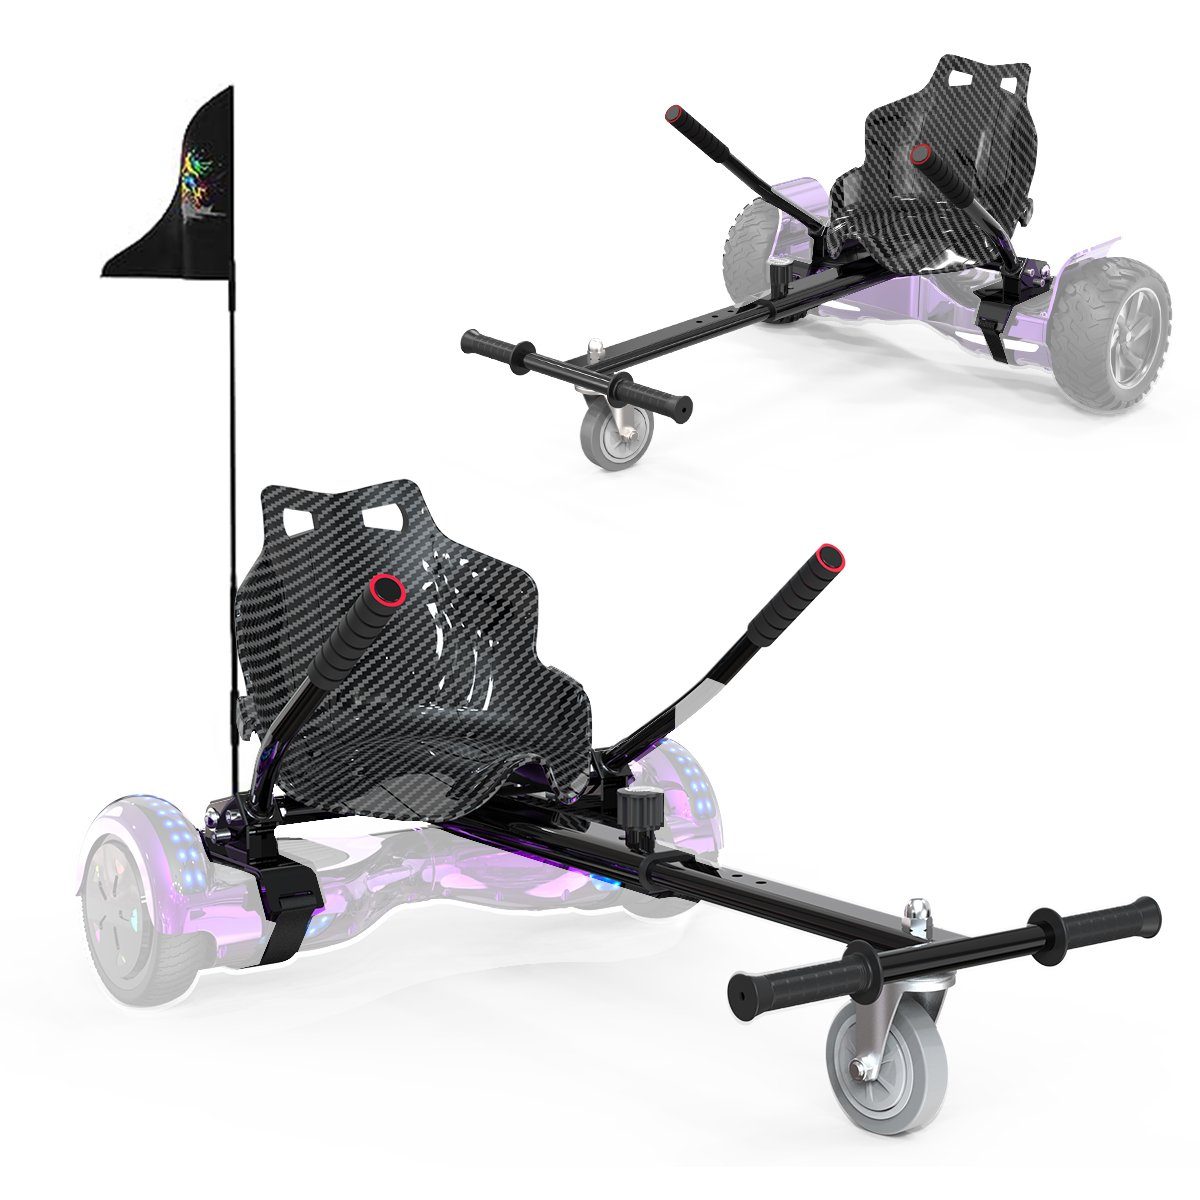 https://i.otto.de/i/otto/ccf8cf63-ba64-4dfc-b1b3-d7ba01ee74de/rcb-balance-scooter-kart-sitz-fuer-6-5-10-hoverboards-go-kart-zubehoer-fuer-balance-scooter-schwarz.jpg?$formatz$